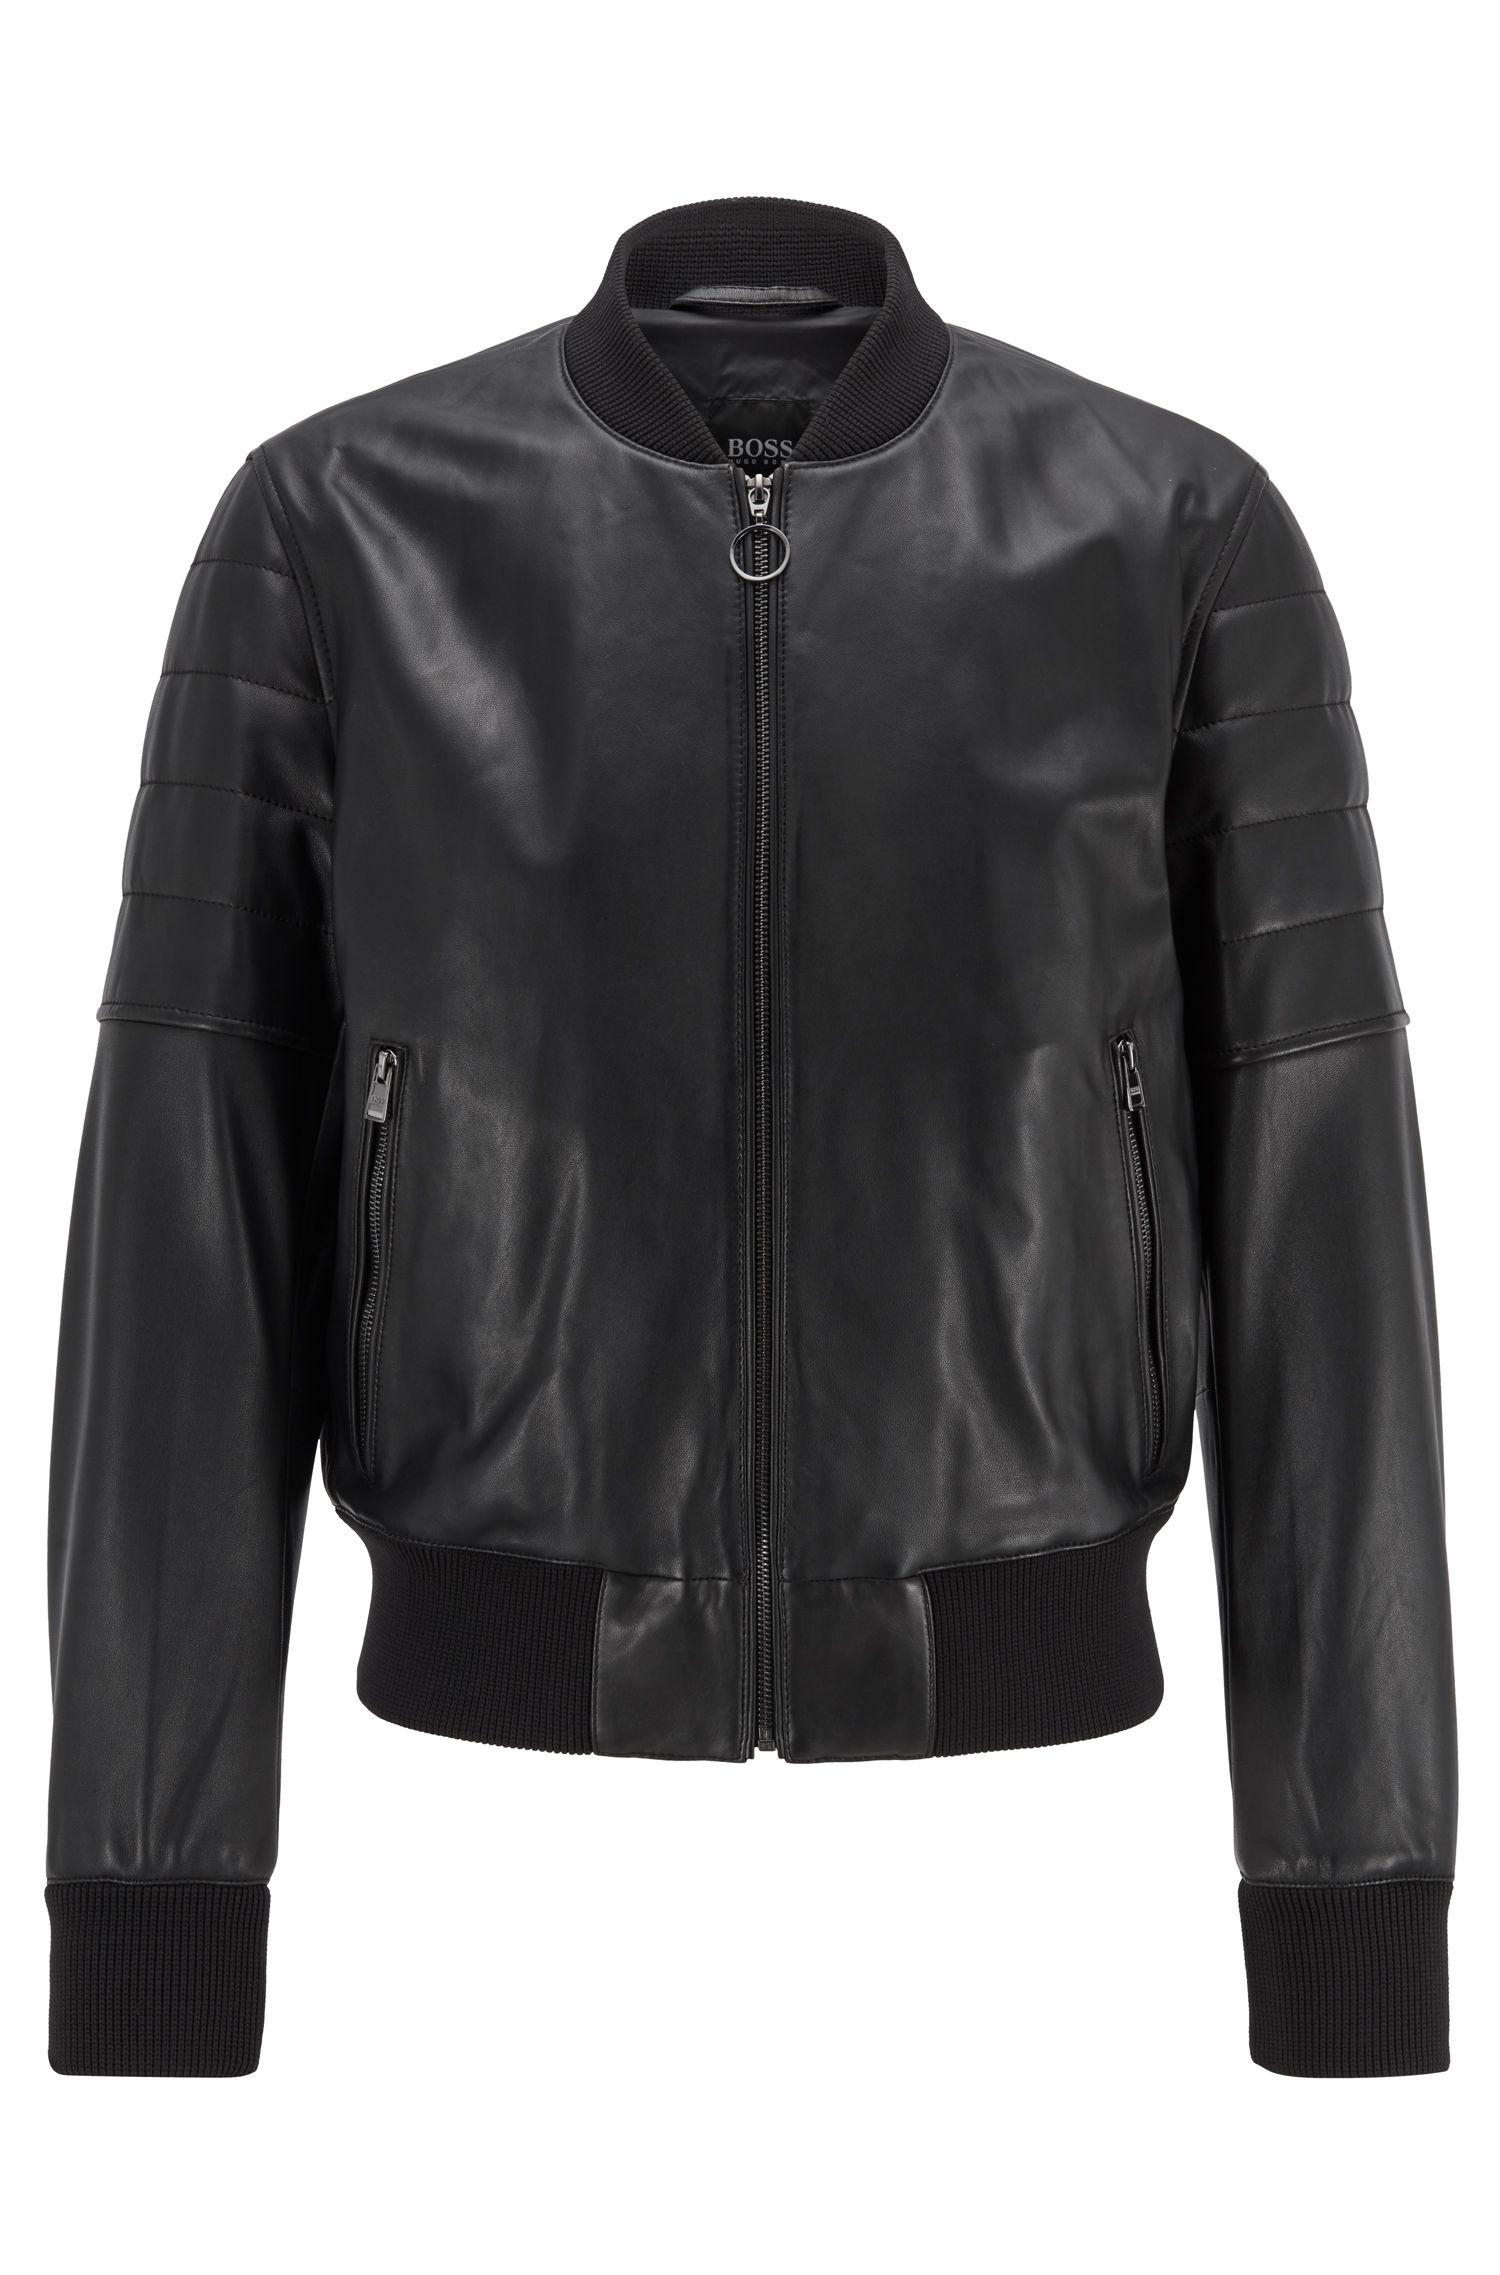 BOSS by Hugo Boss Bomber Jacket In Nappa Leather in Black for Men - Lyst